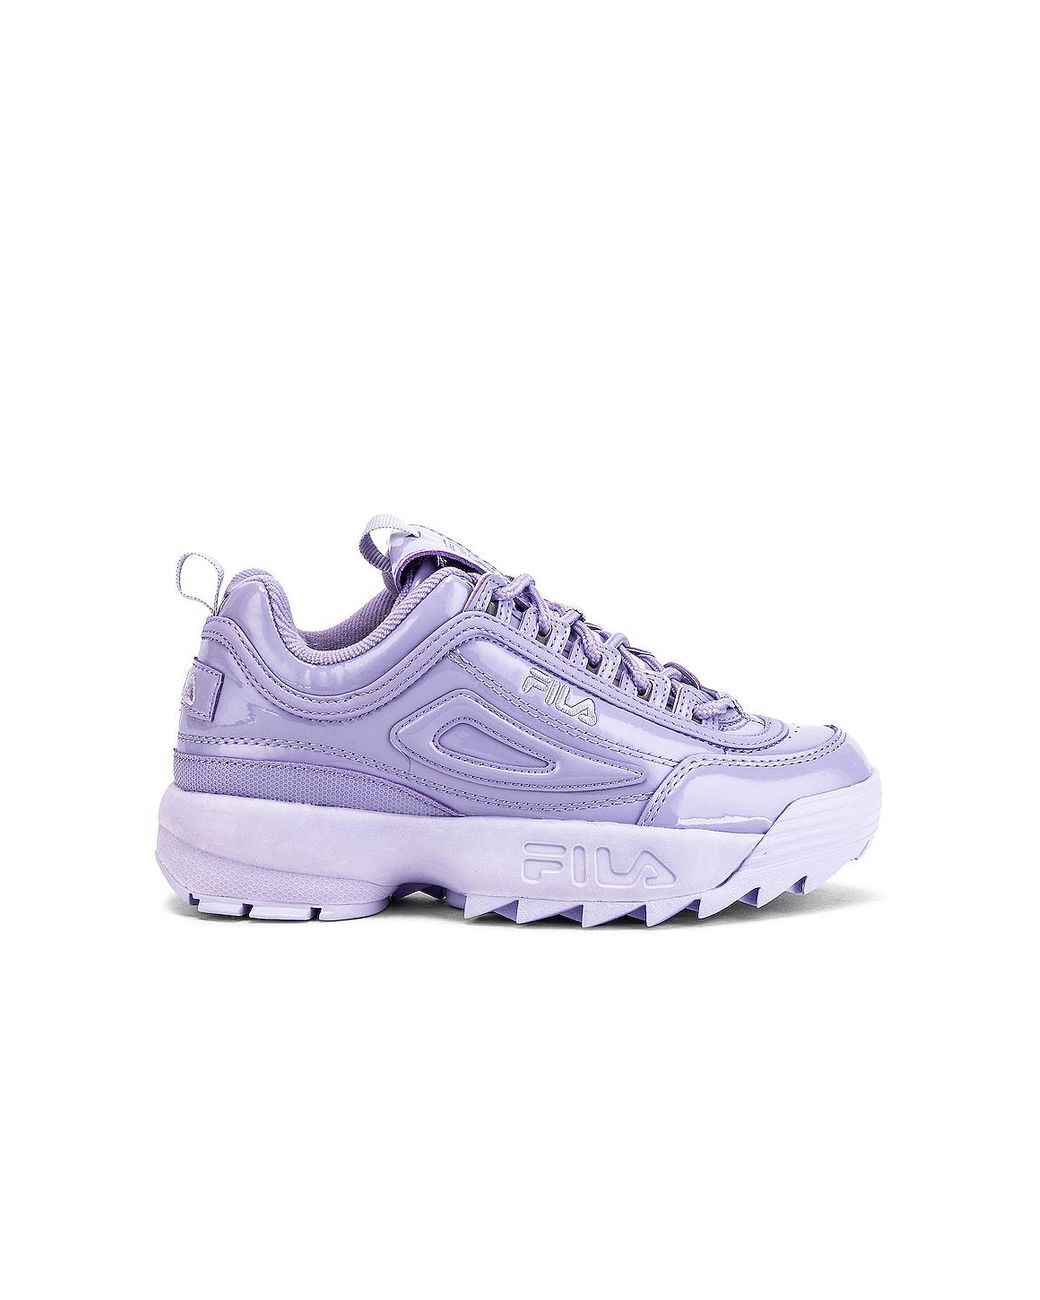 Fila Disruptor Ii Premium Patent Sneaker in Purple | Lyst